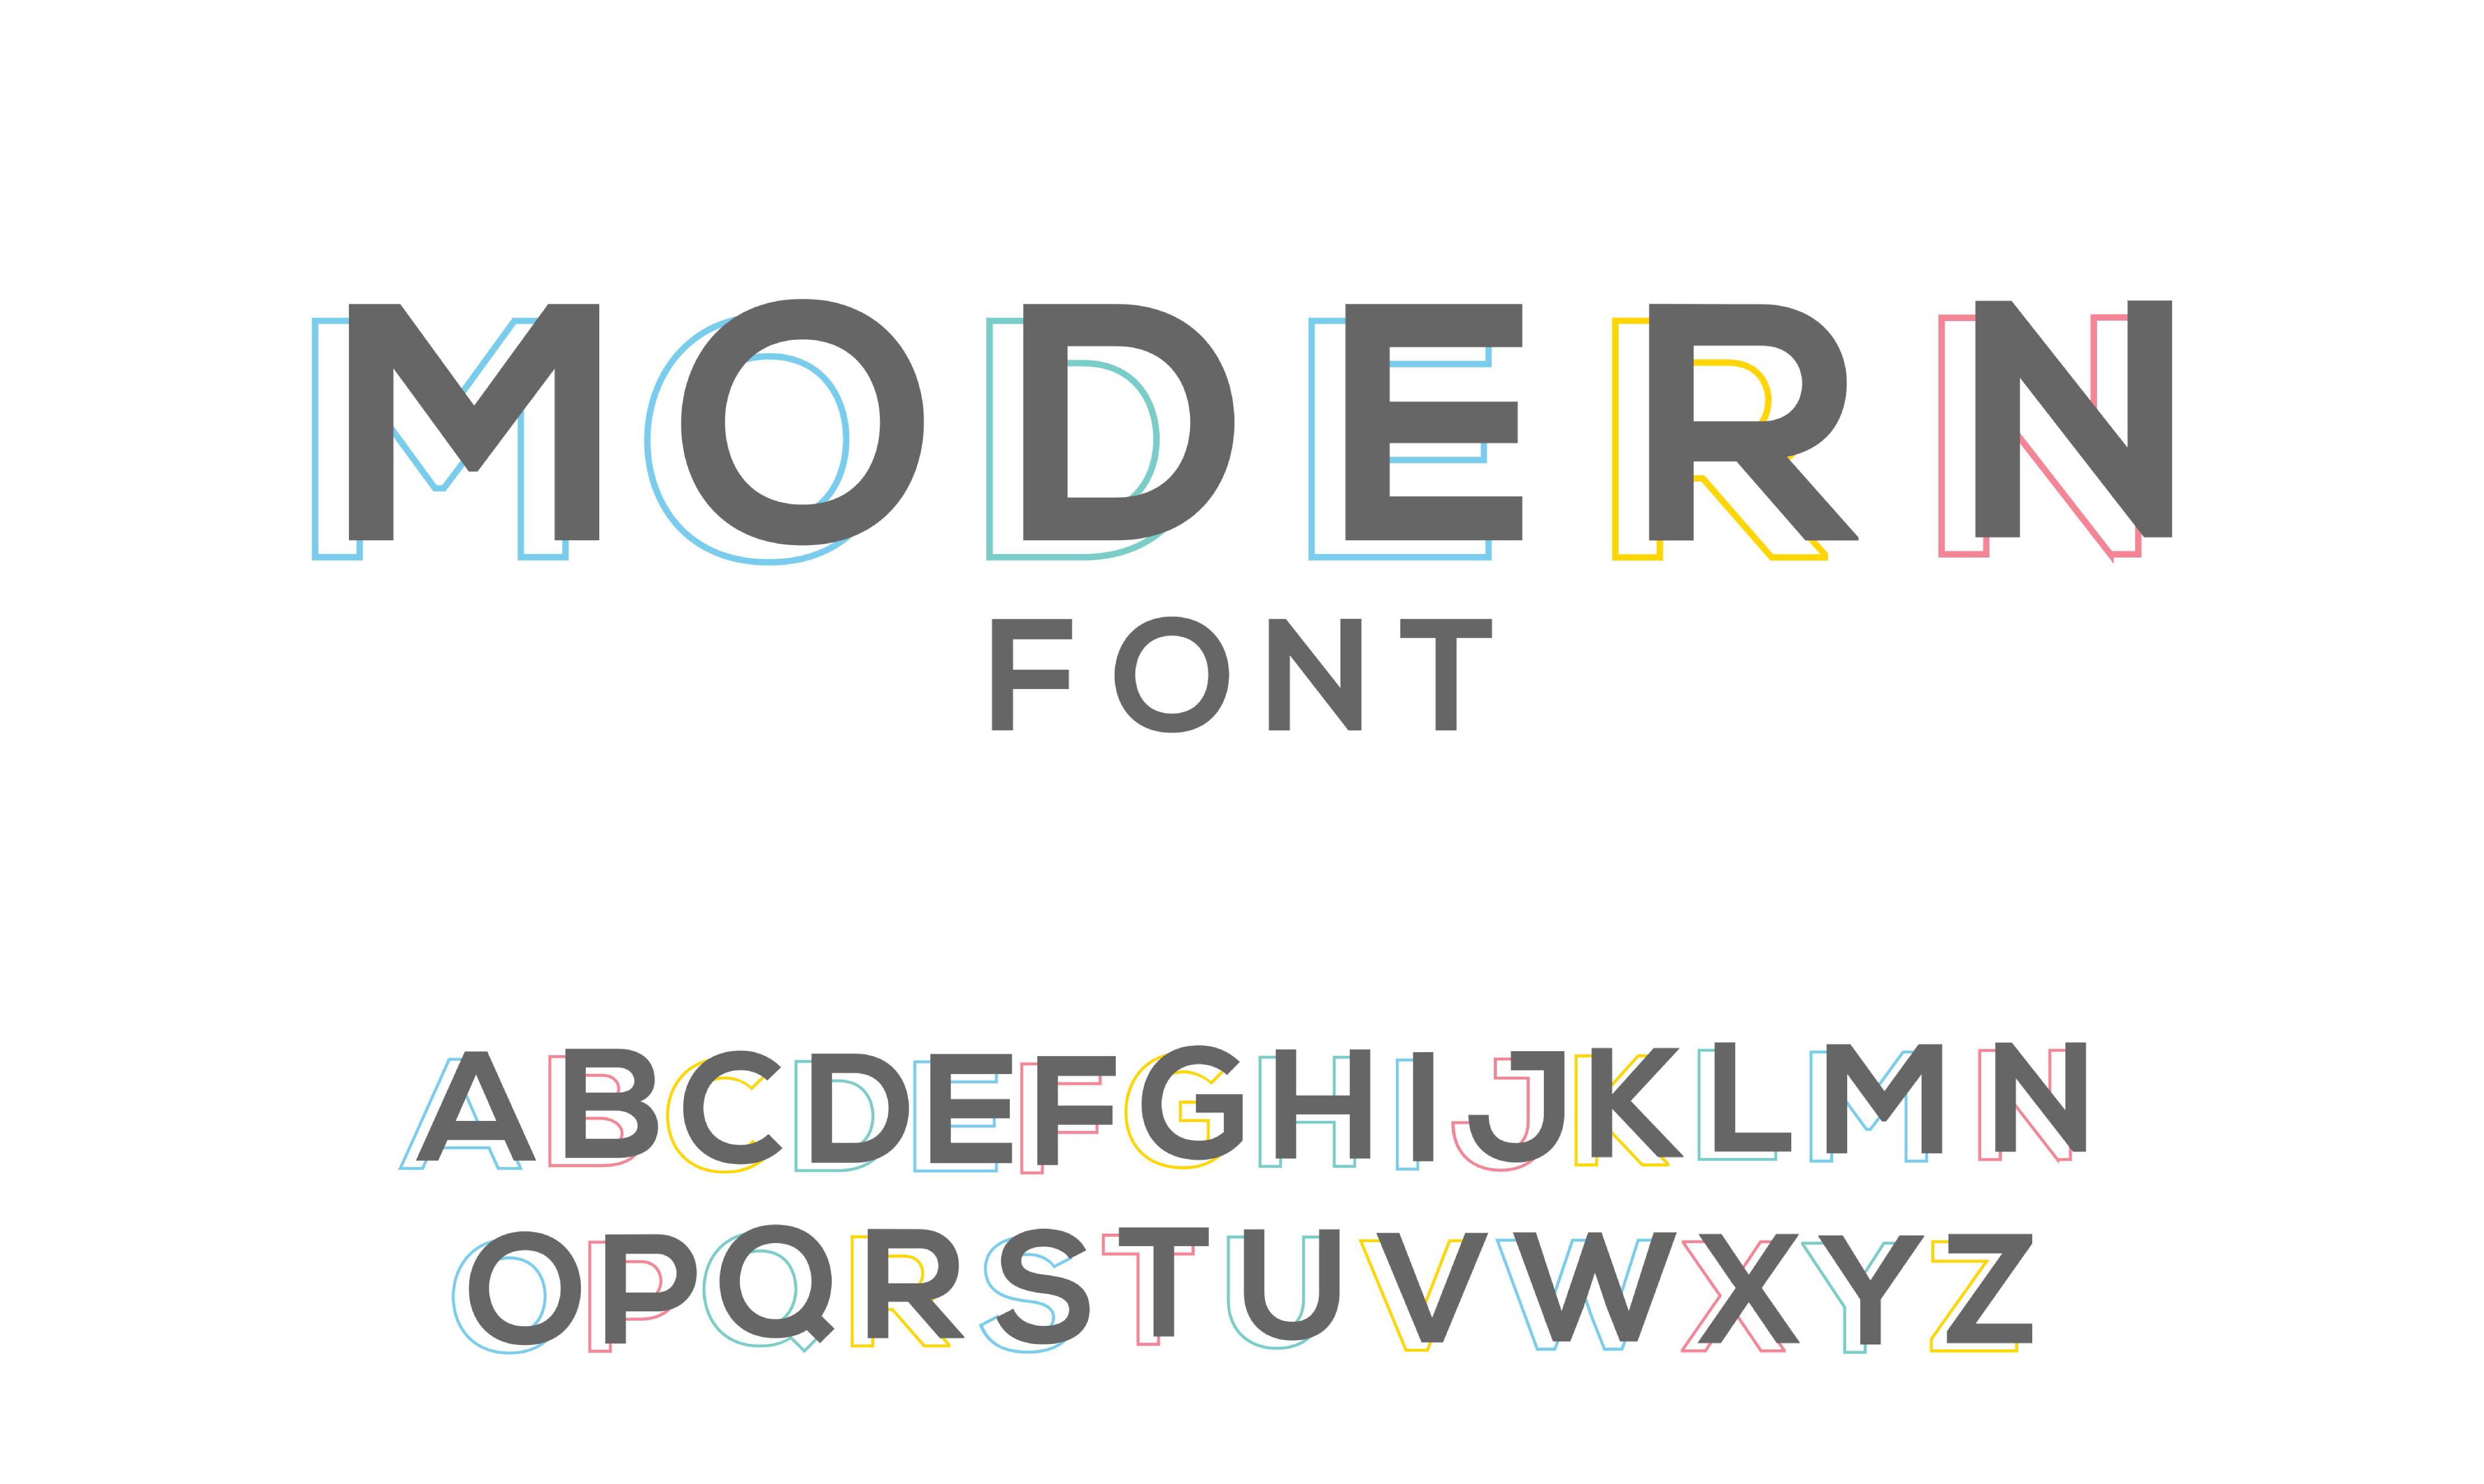  simple  modern custom font  Download Free Vectors Clipart 